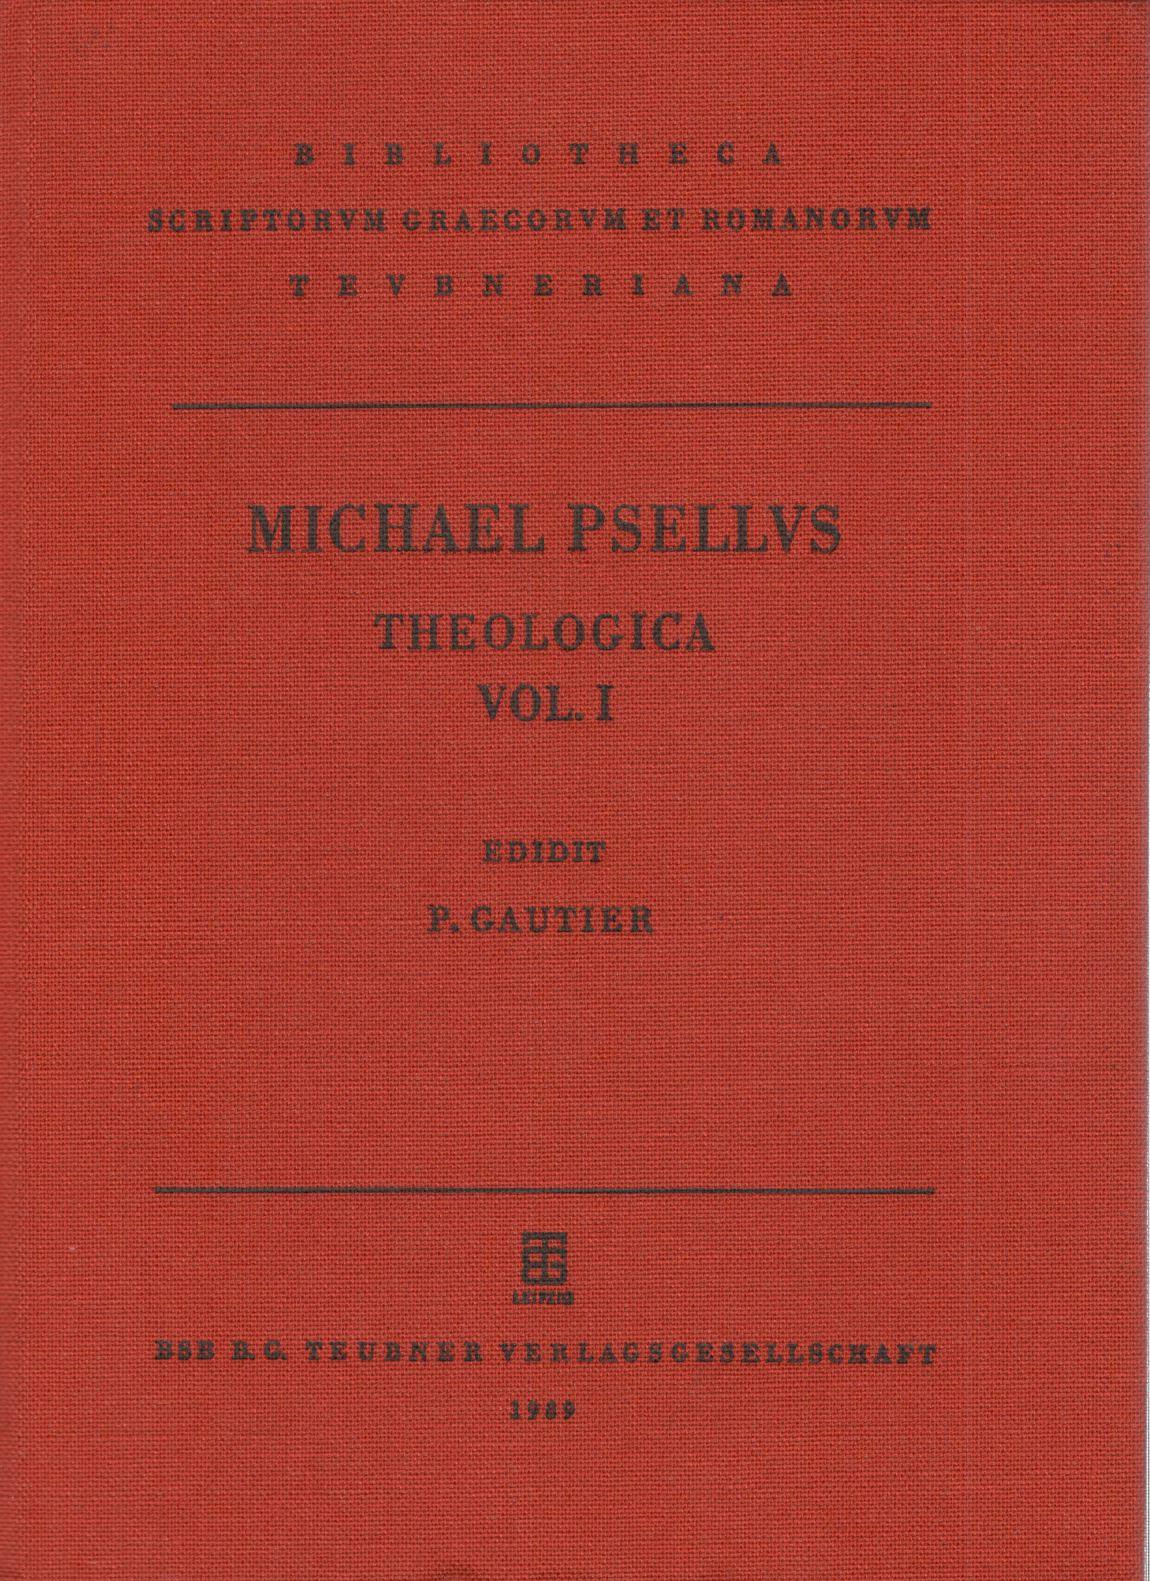 MICHAELIS PSELLI THEOLOGICA VOL. I